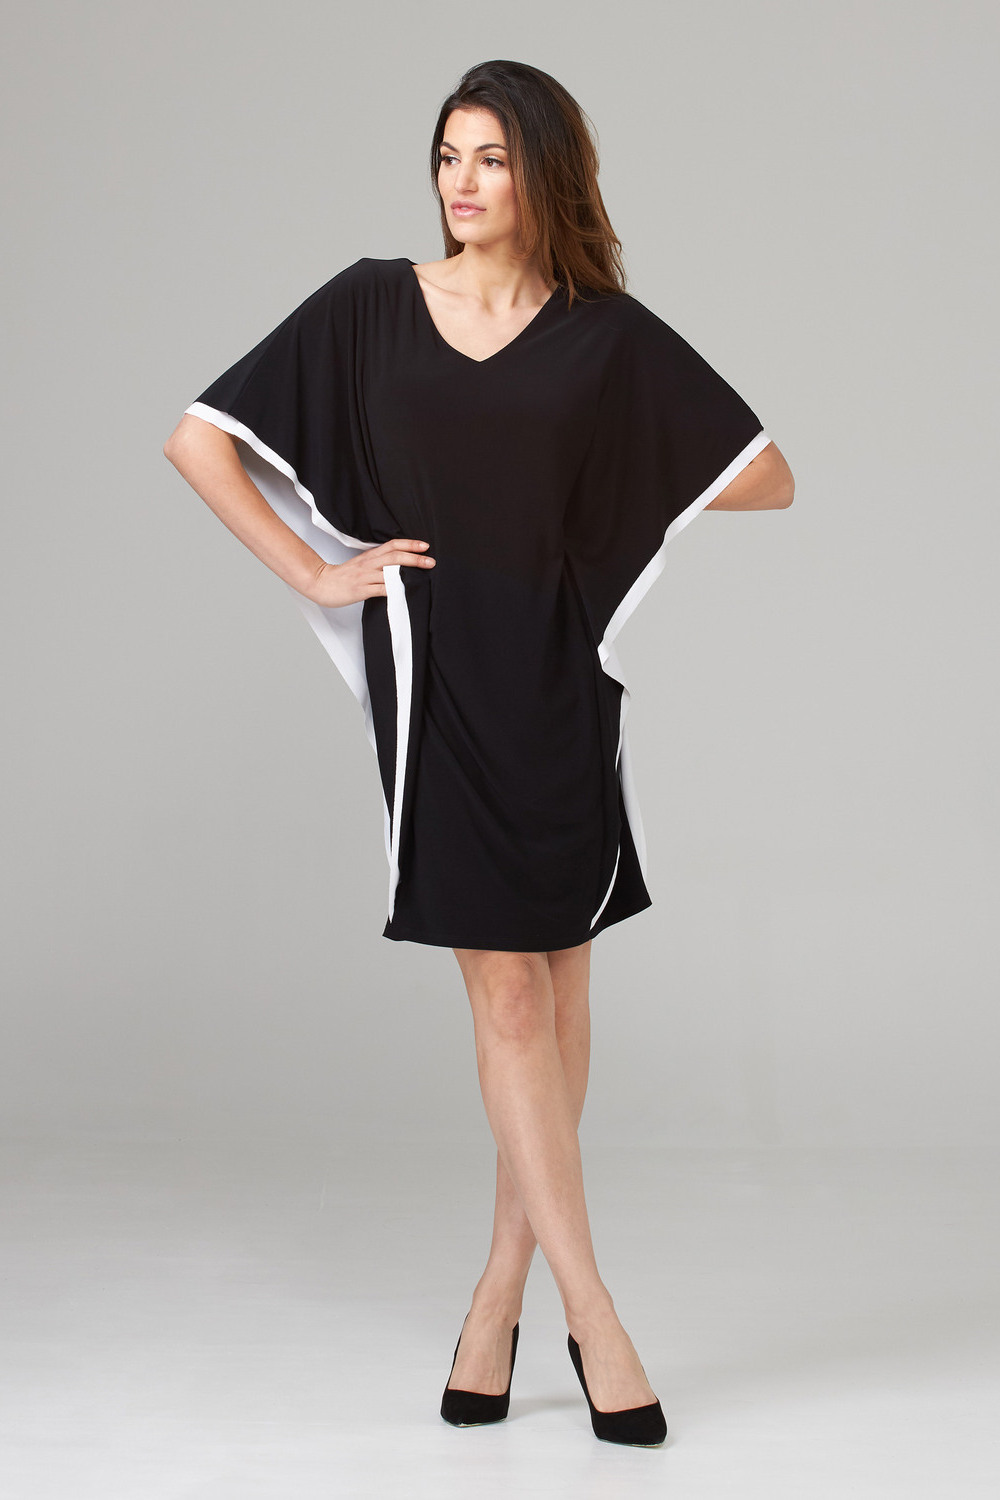 Joseph Ribkoff  Dress Style 202124. Black/vanilla